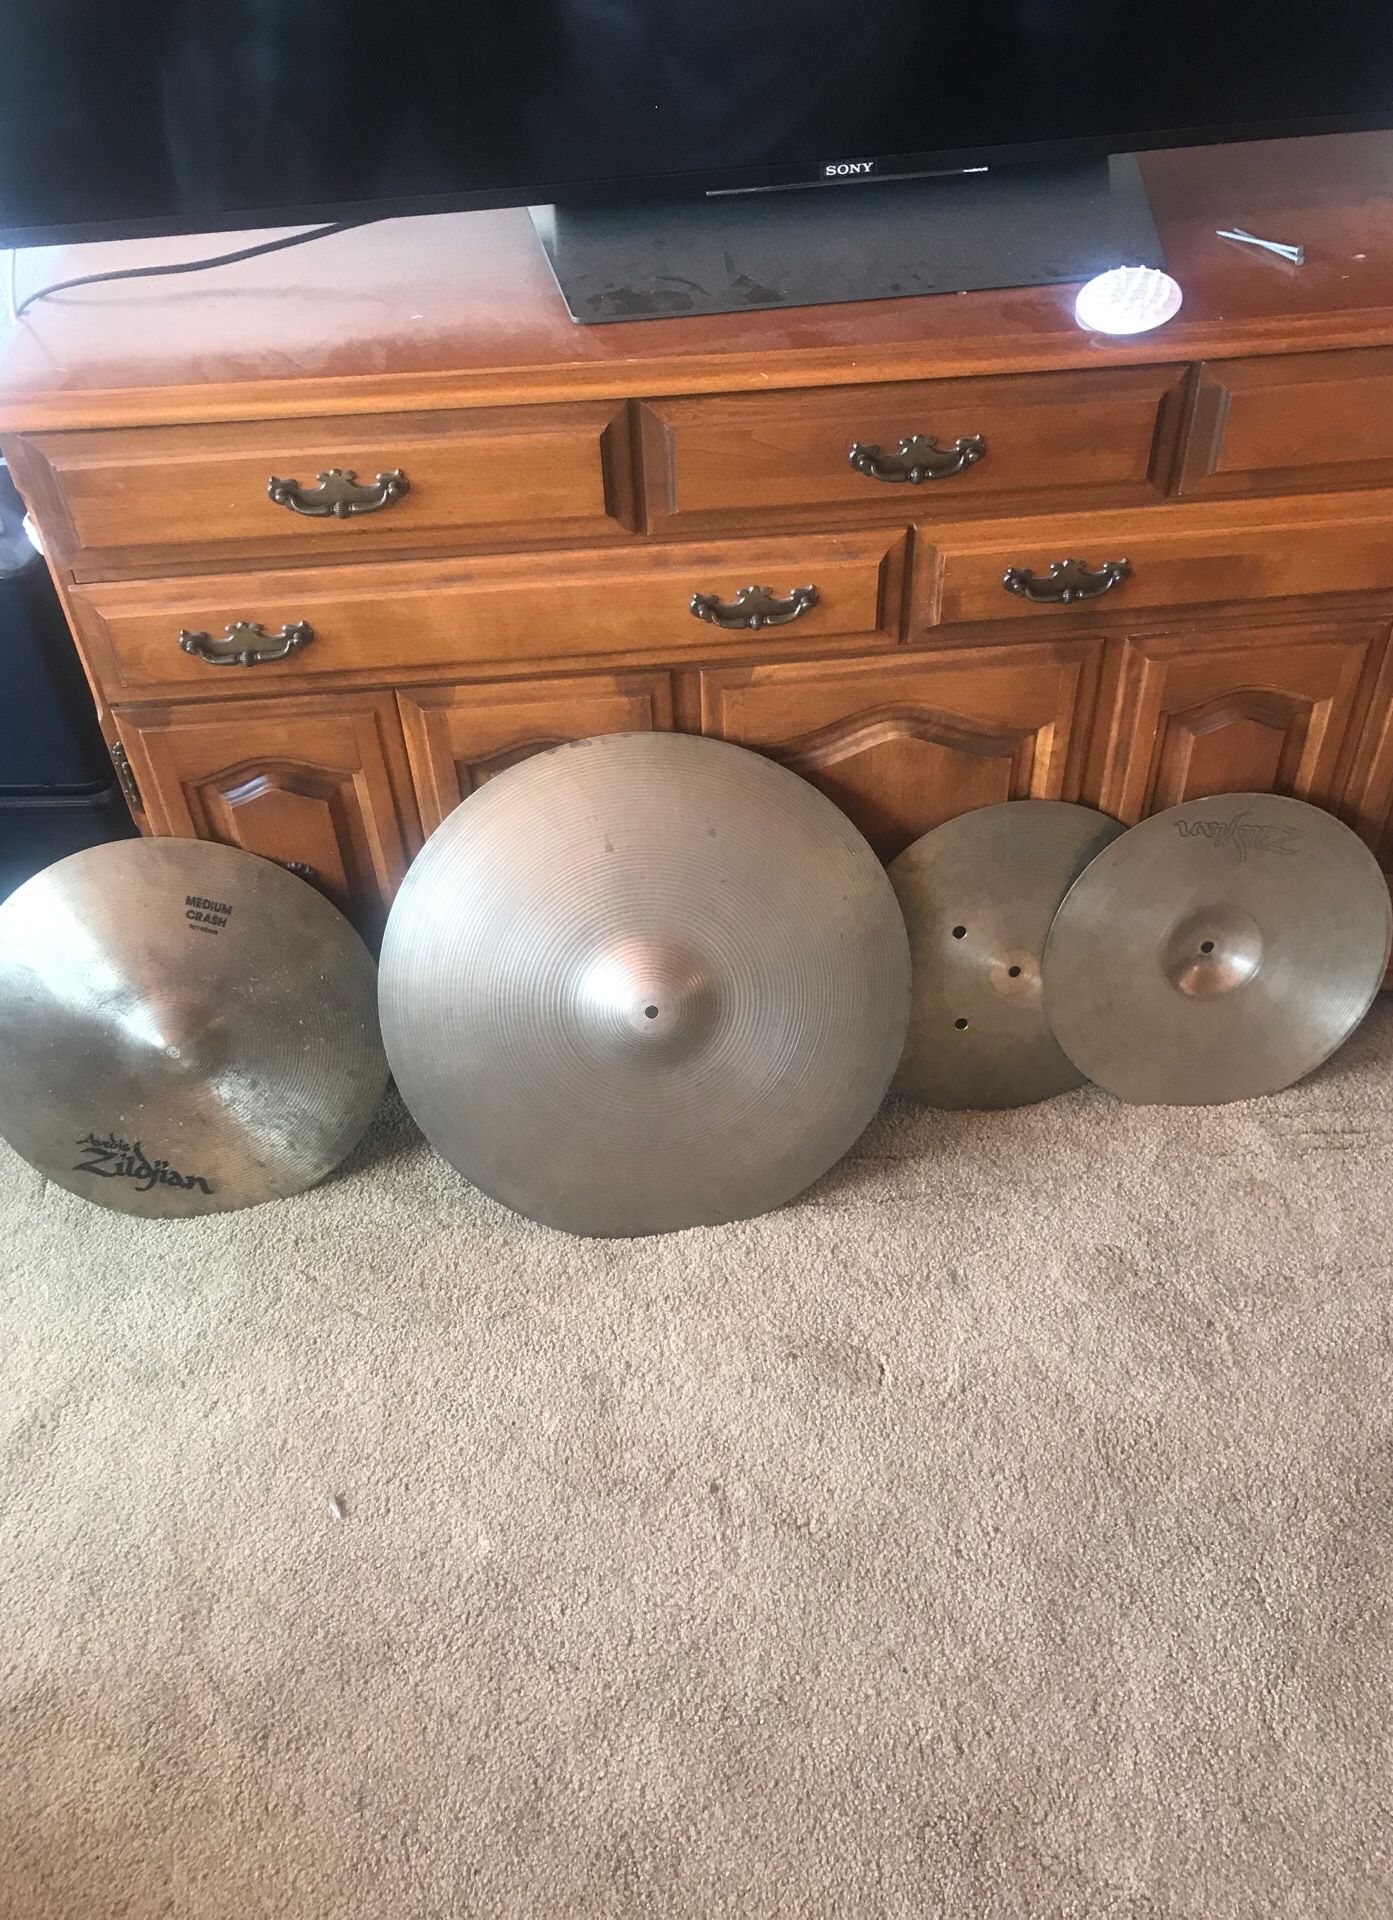 Set of Zildjian cymbals